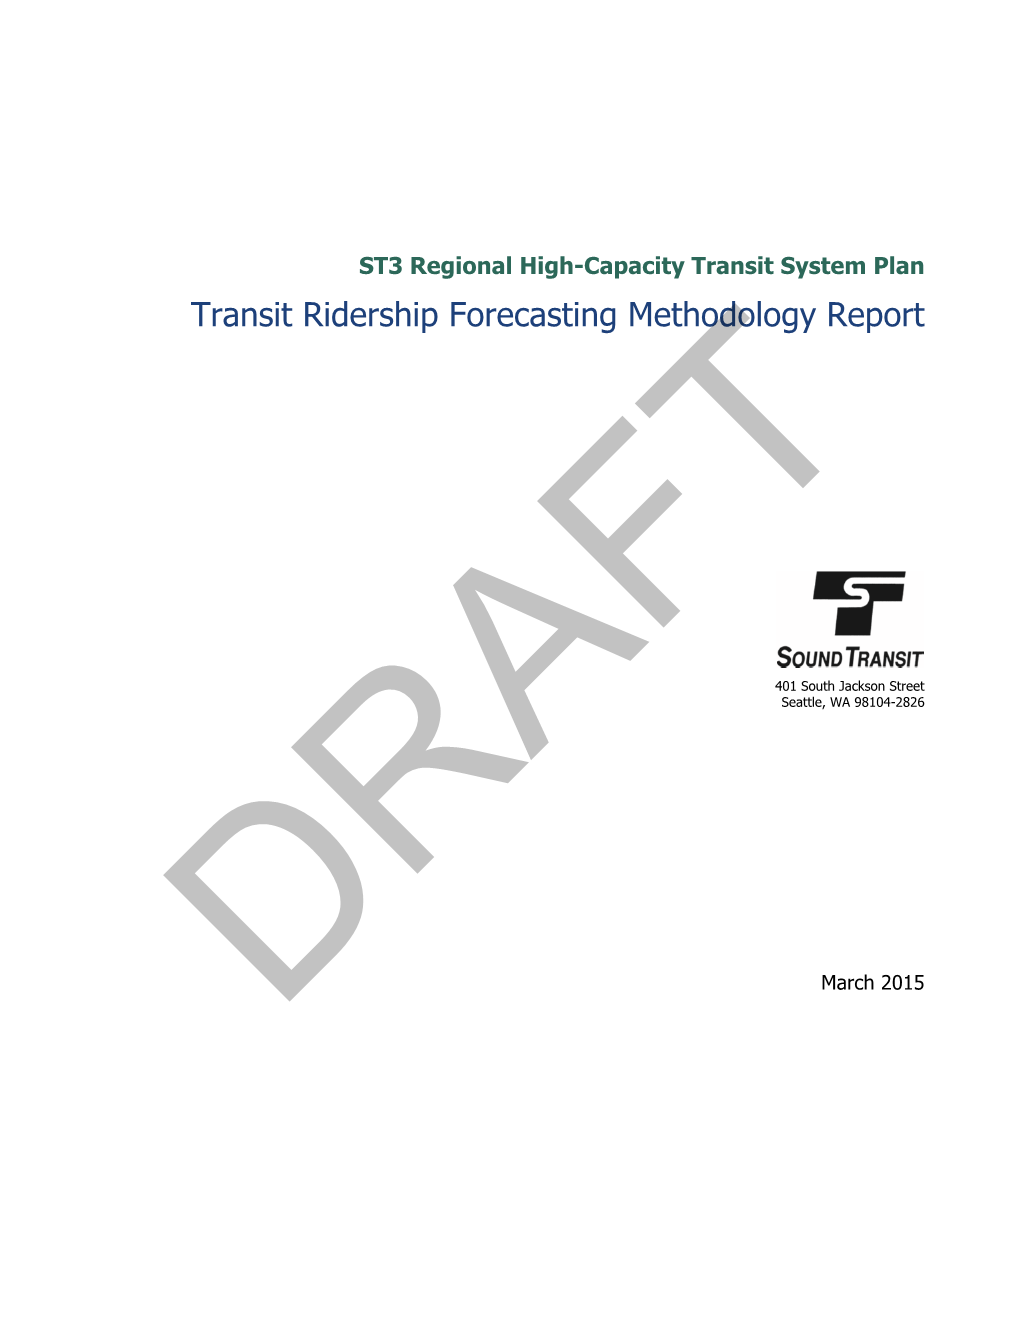 ST3 Transit Ridership Forecasting Methodology Report